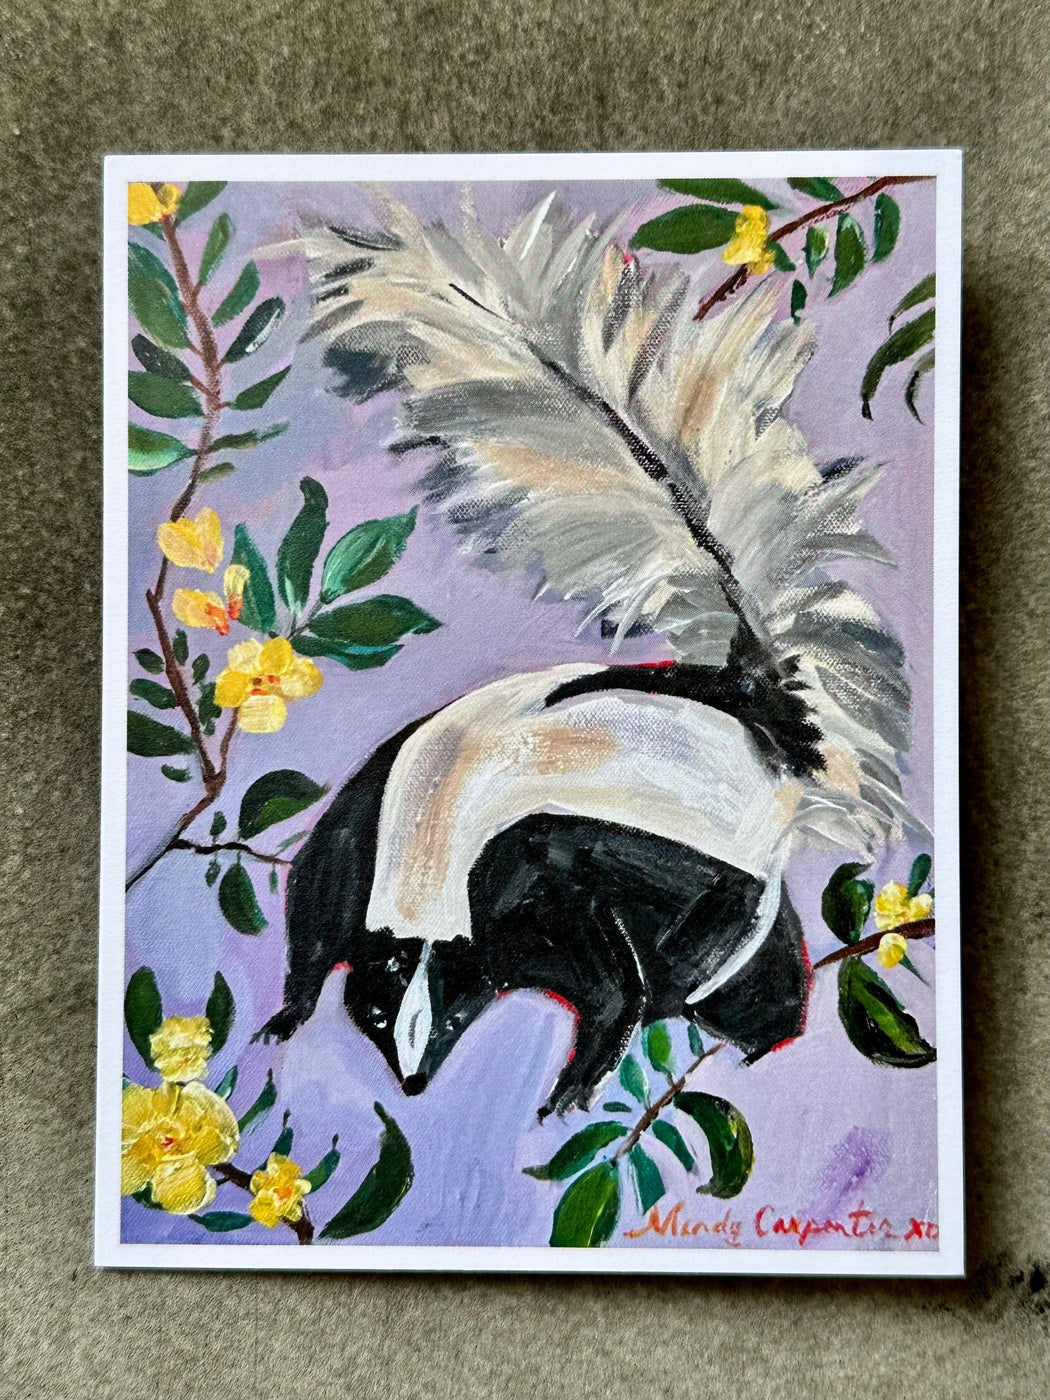 "Le Skunk" Card by Mindy Carpenter